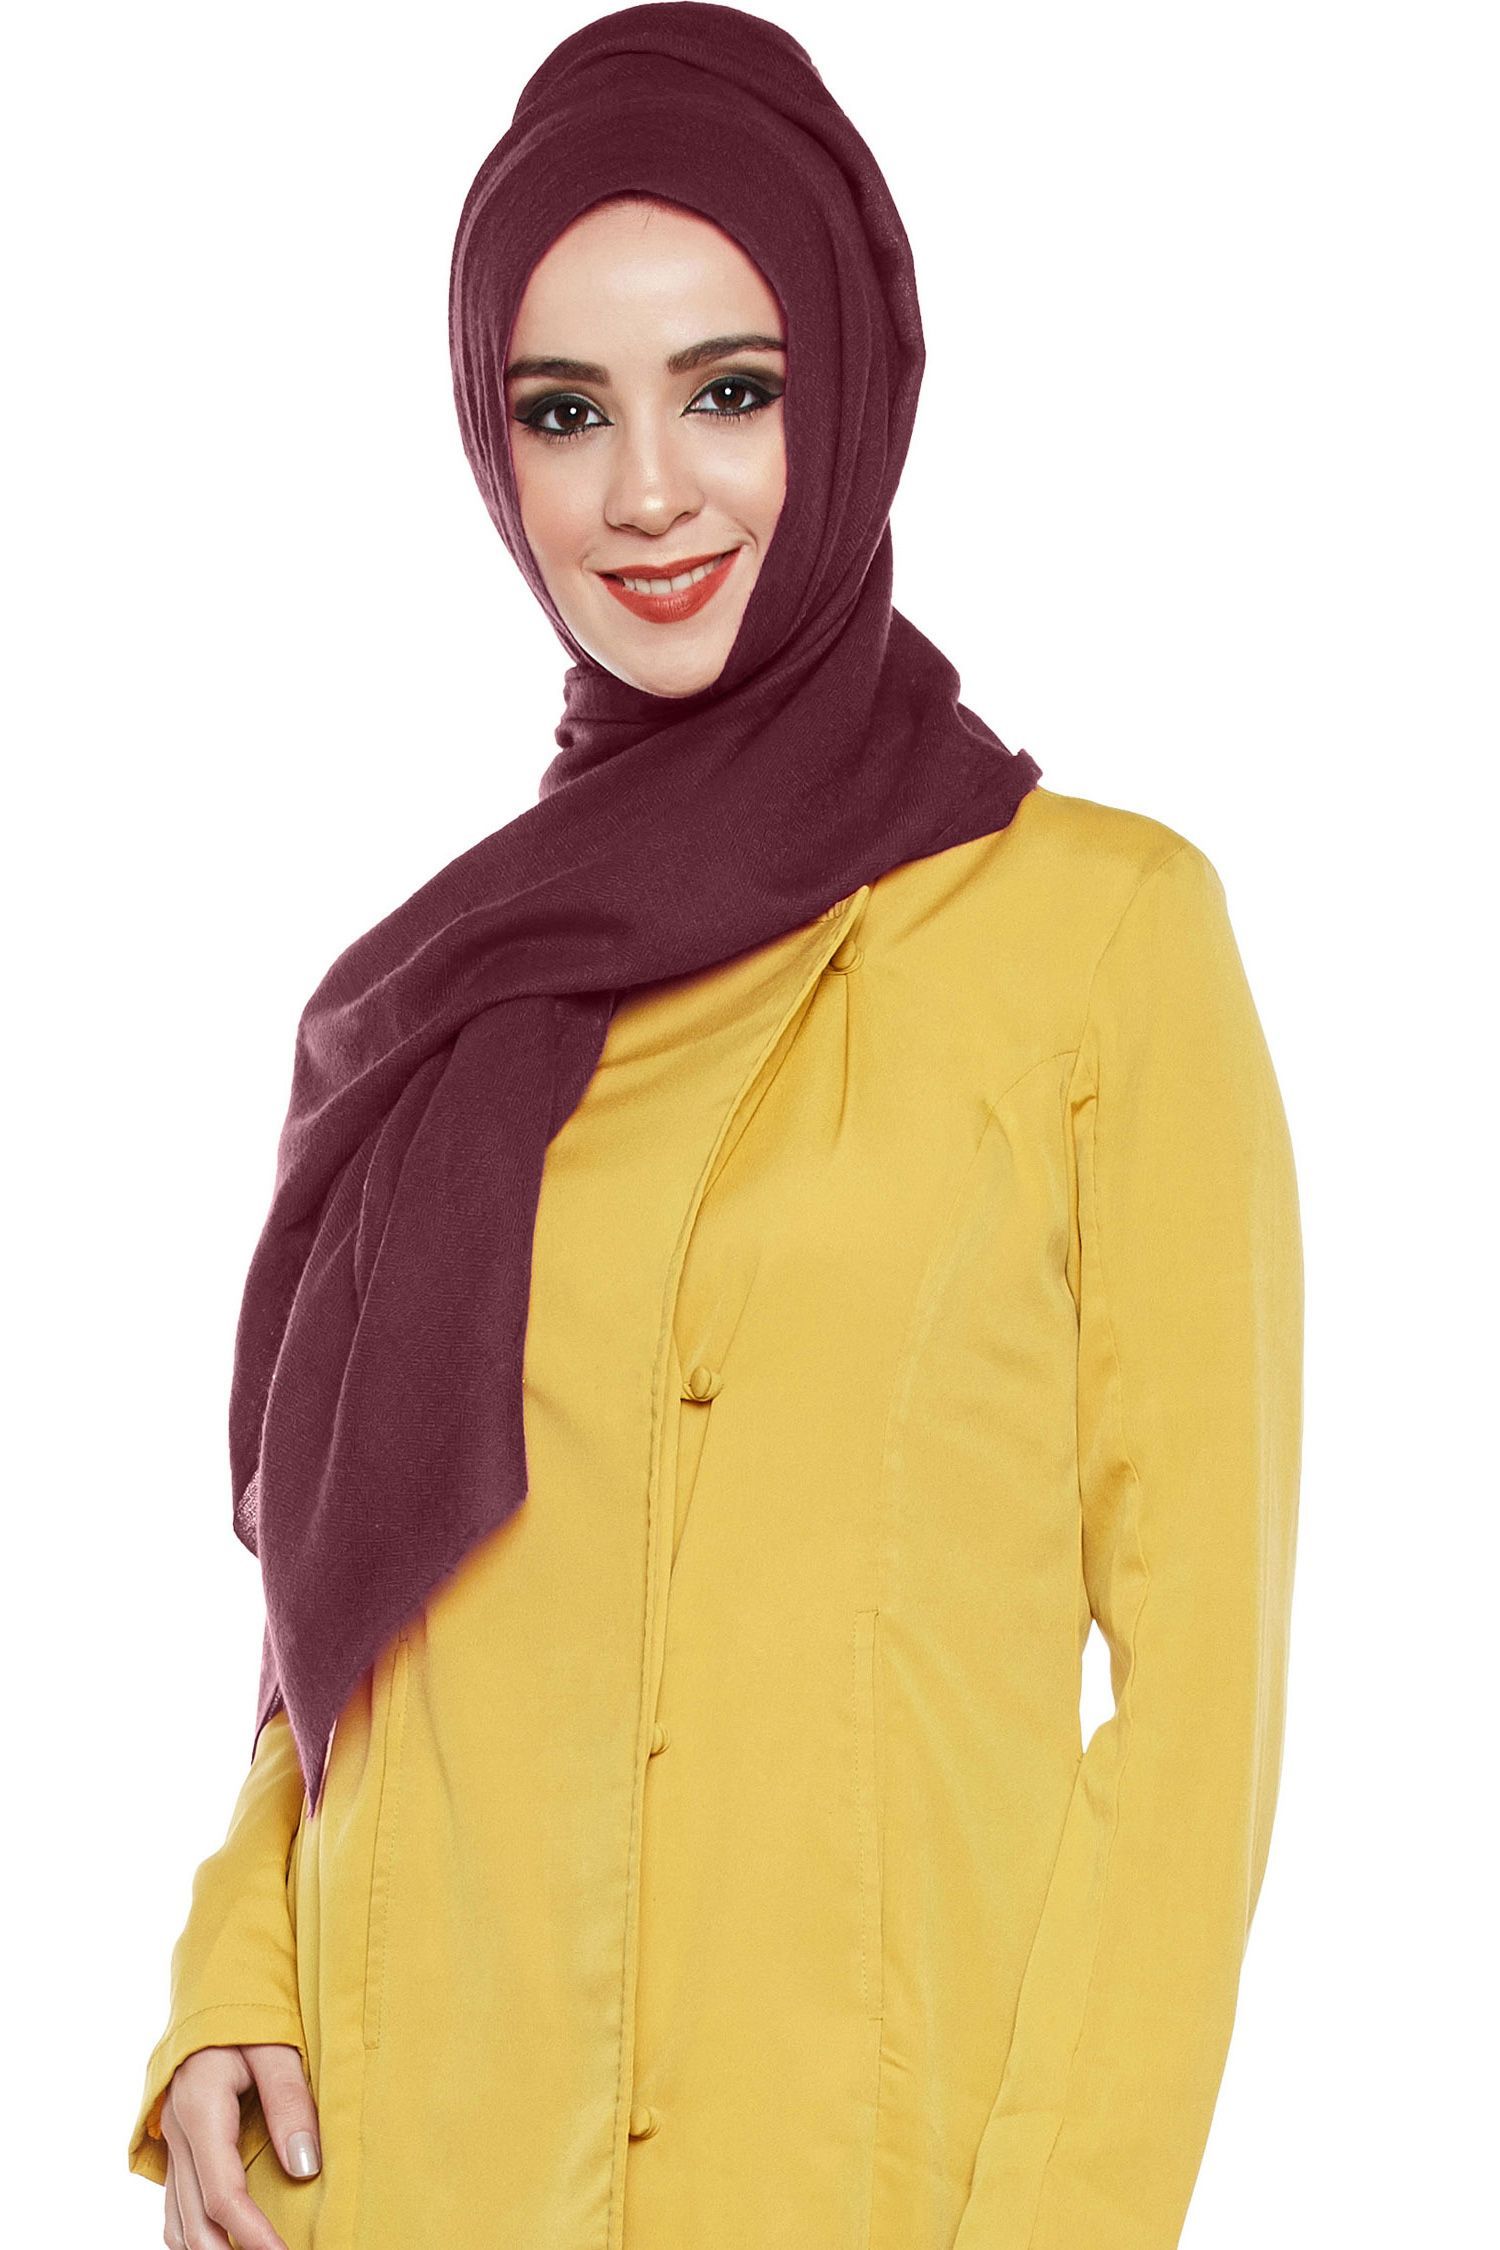 Burgundy Pashmina Hijab | Handmade Cashmere Head Scarf